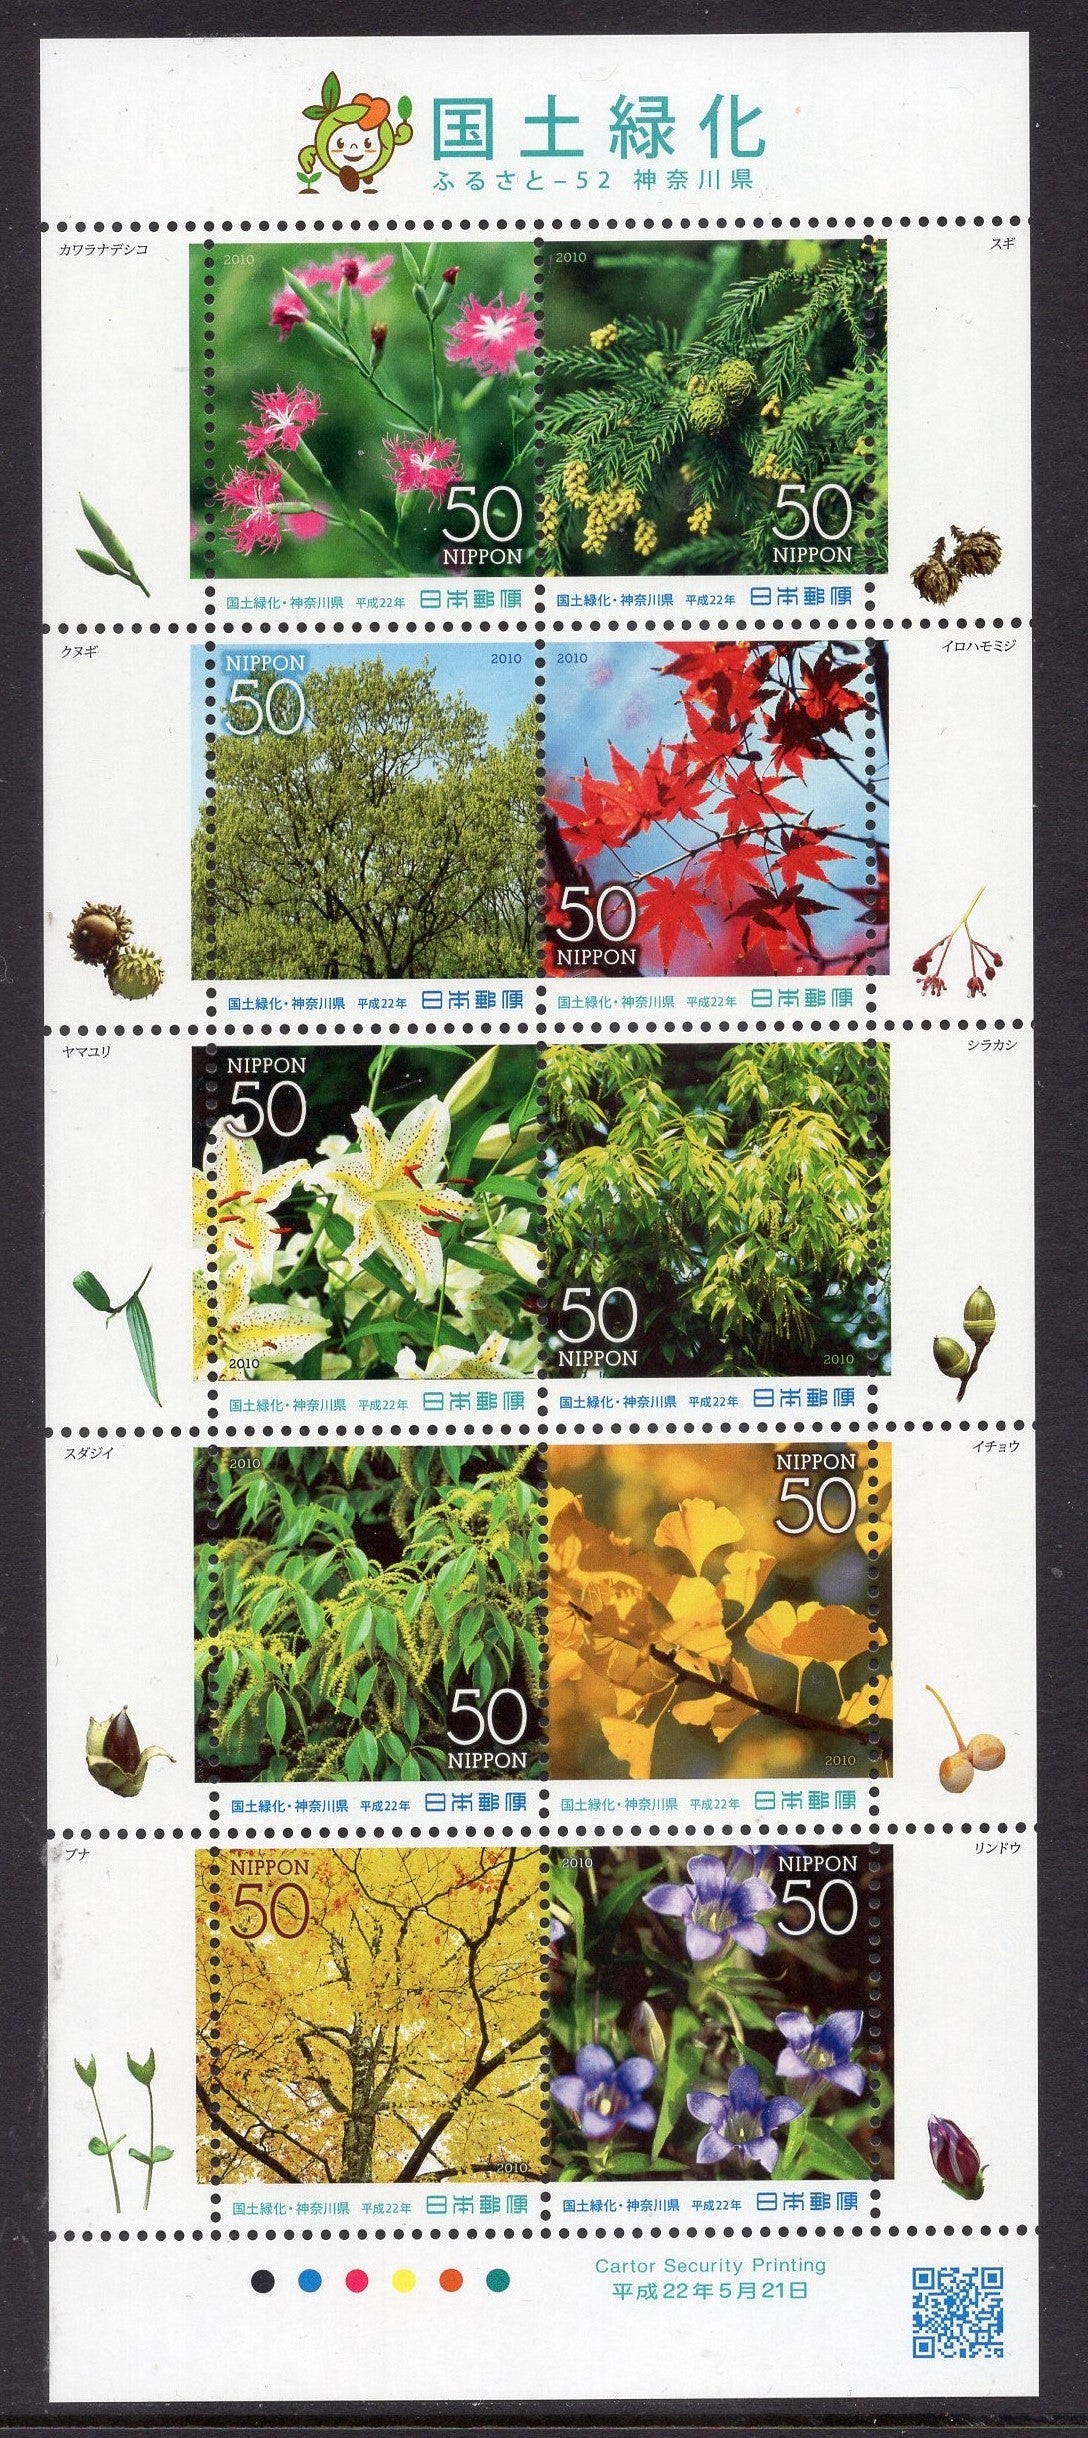 JAPAN - KANAGAWA PREFECTURE LAND AFFORESTATION Campaign MiniSheet of 10 Stamps. 